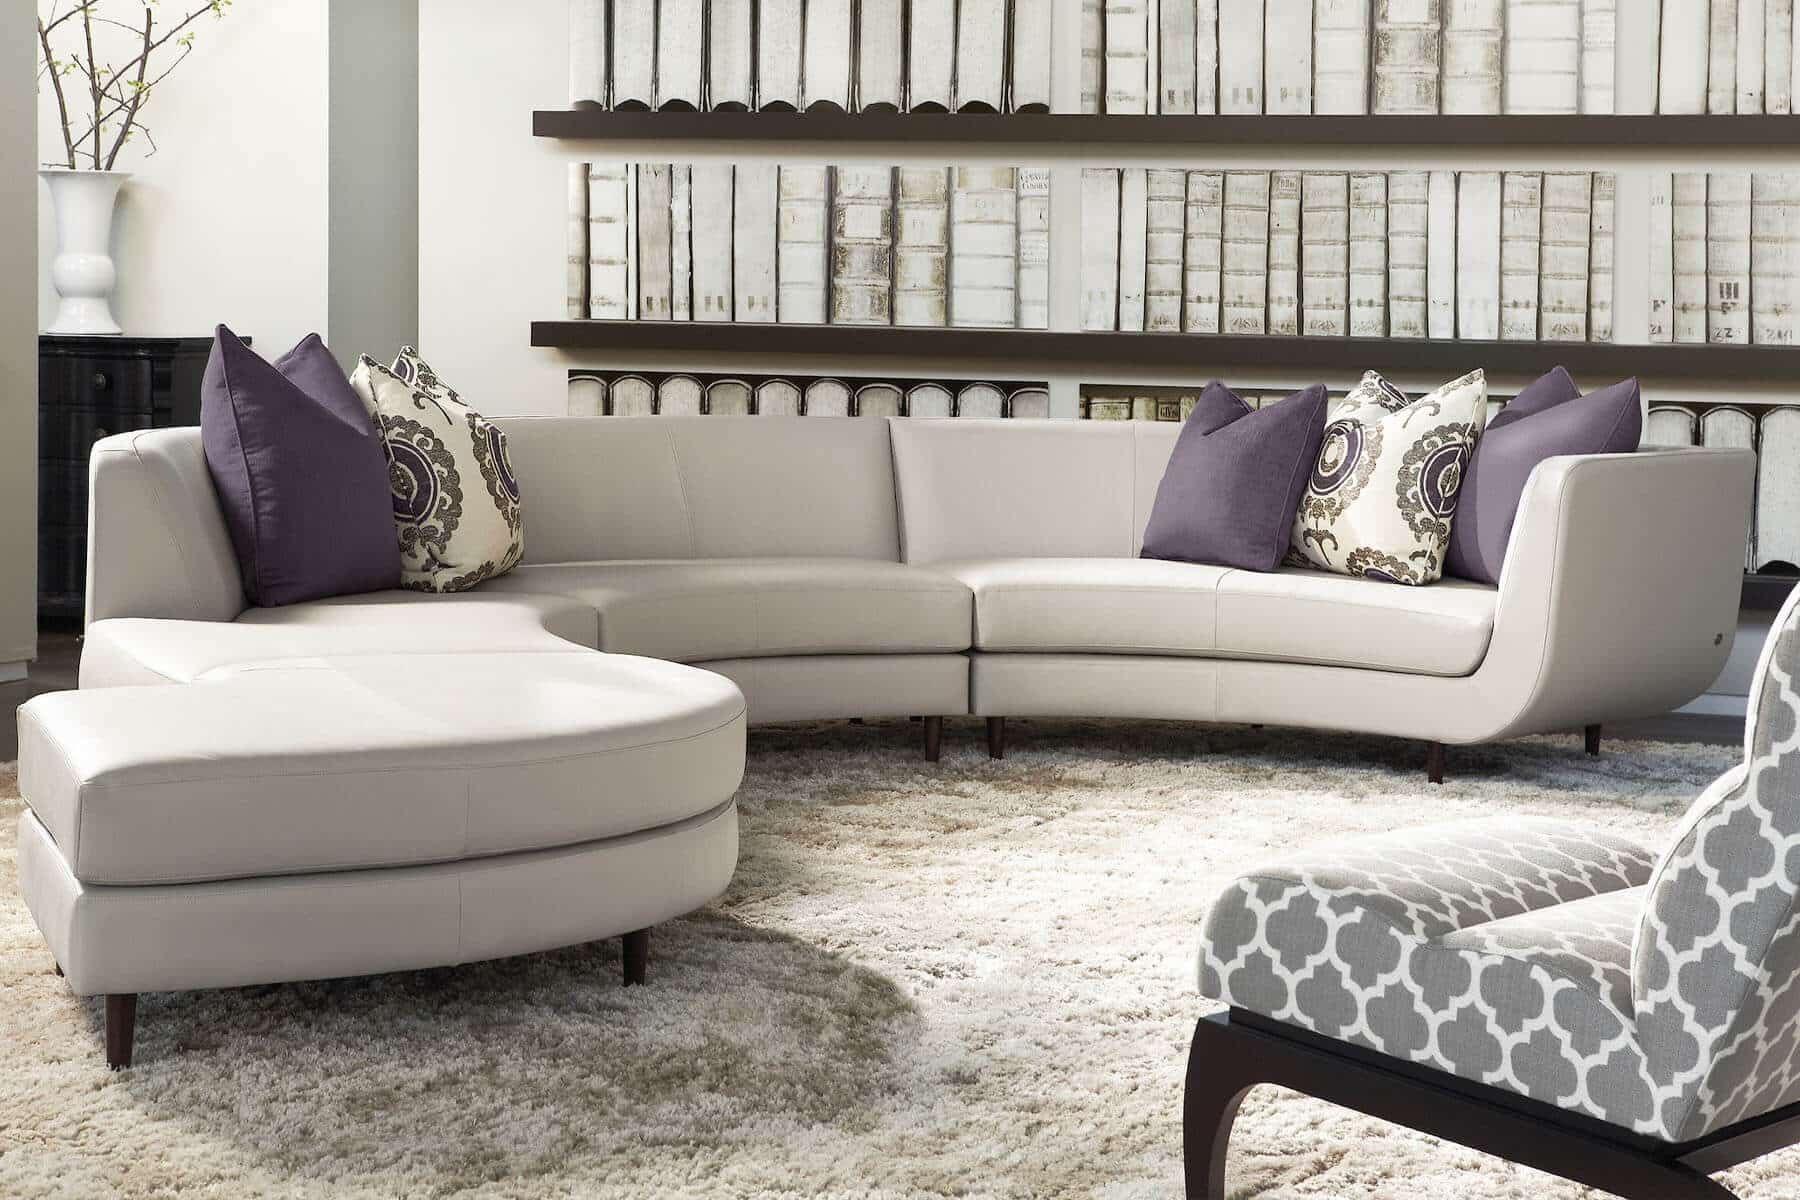 Off-white modern sofa & modern living room furniture from San Francisco Design